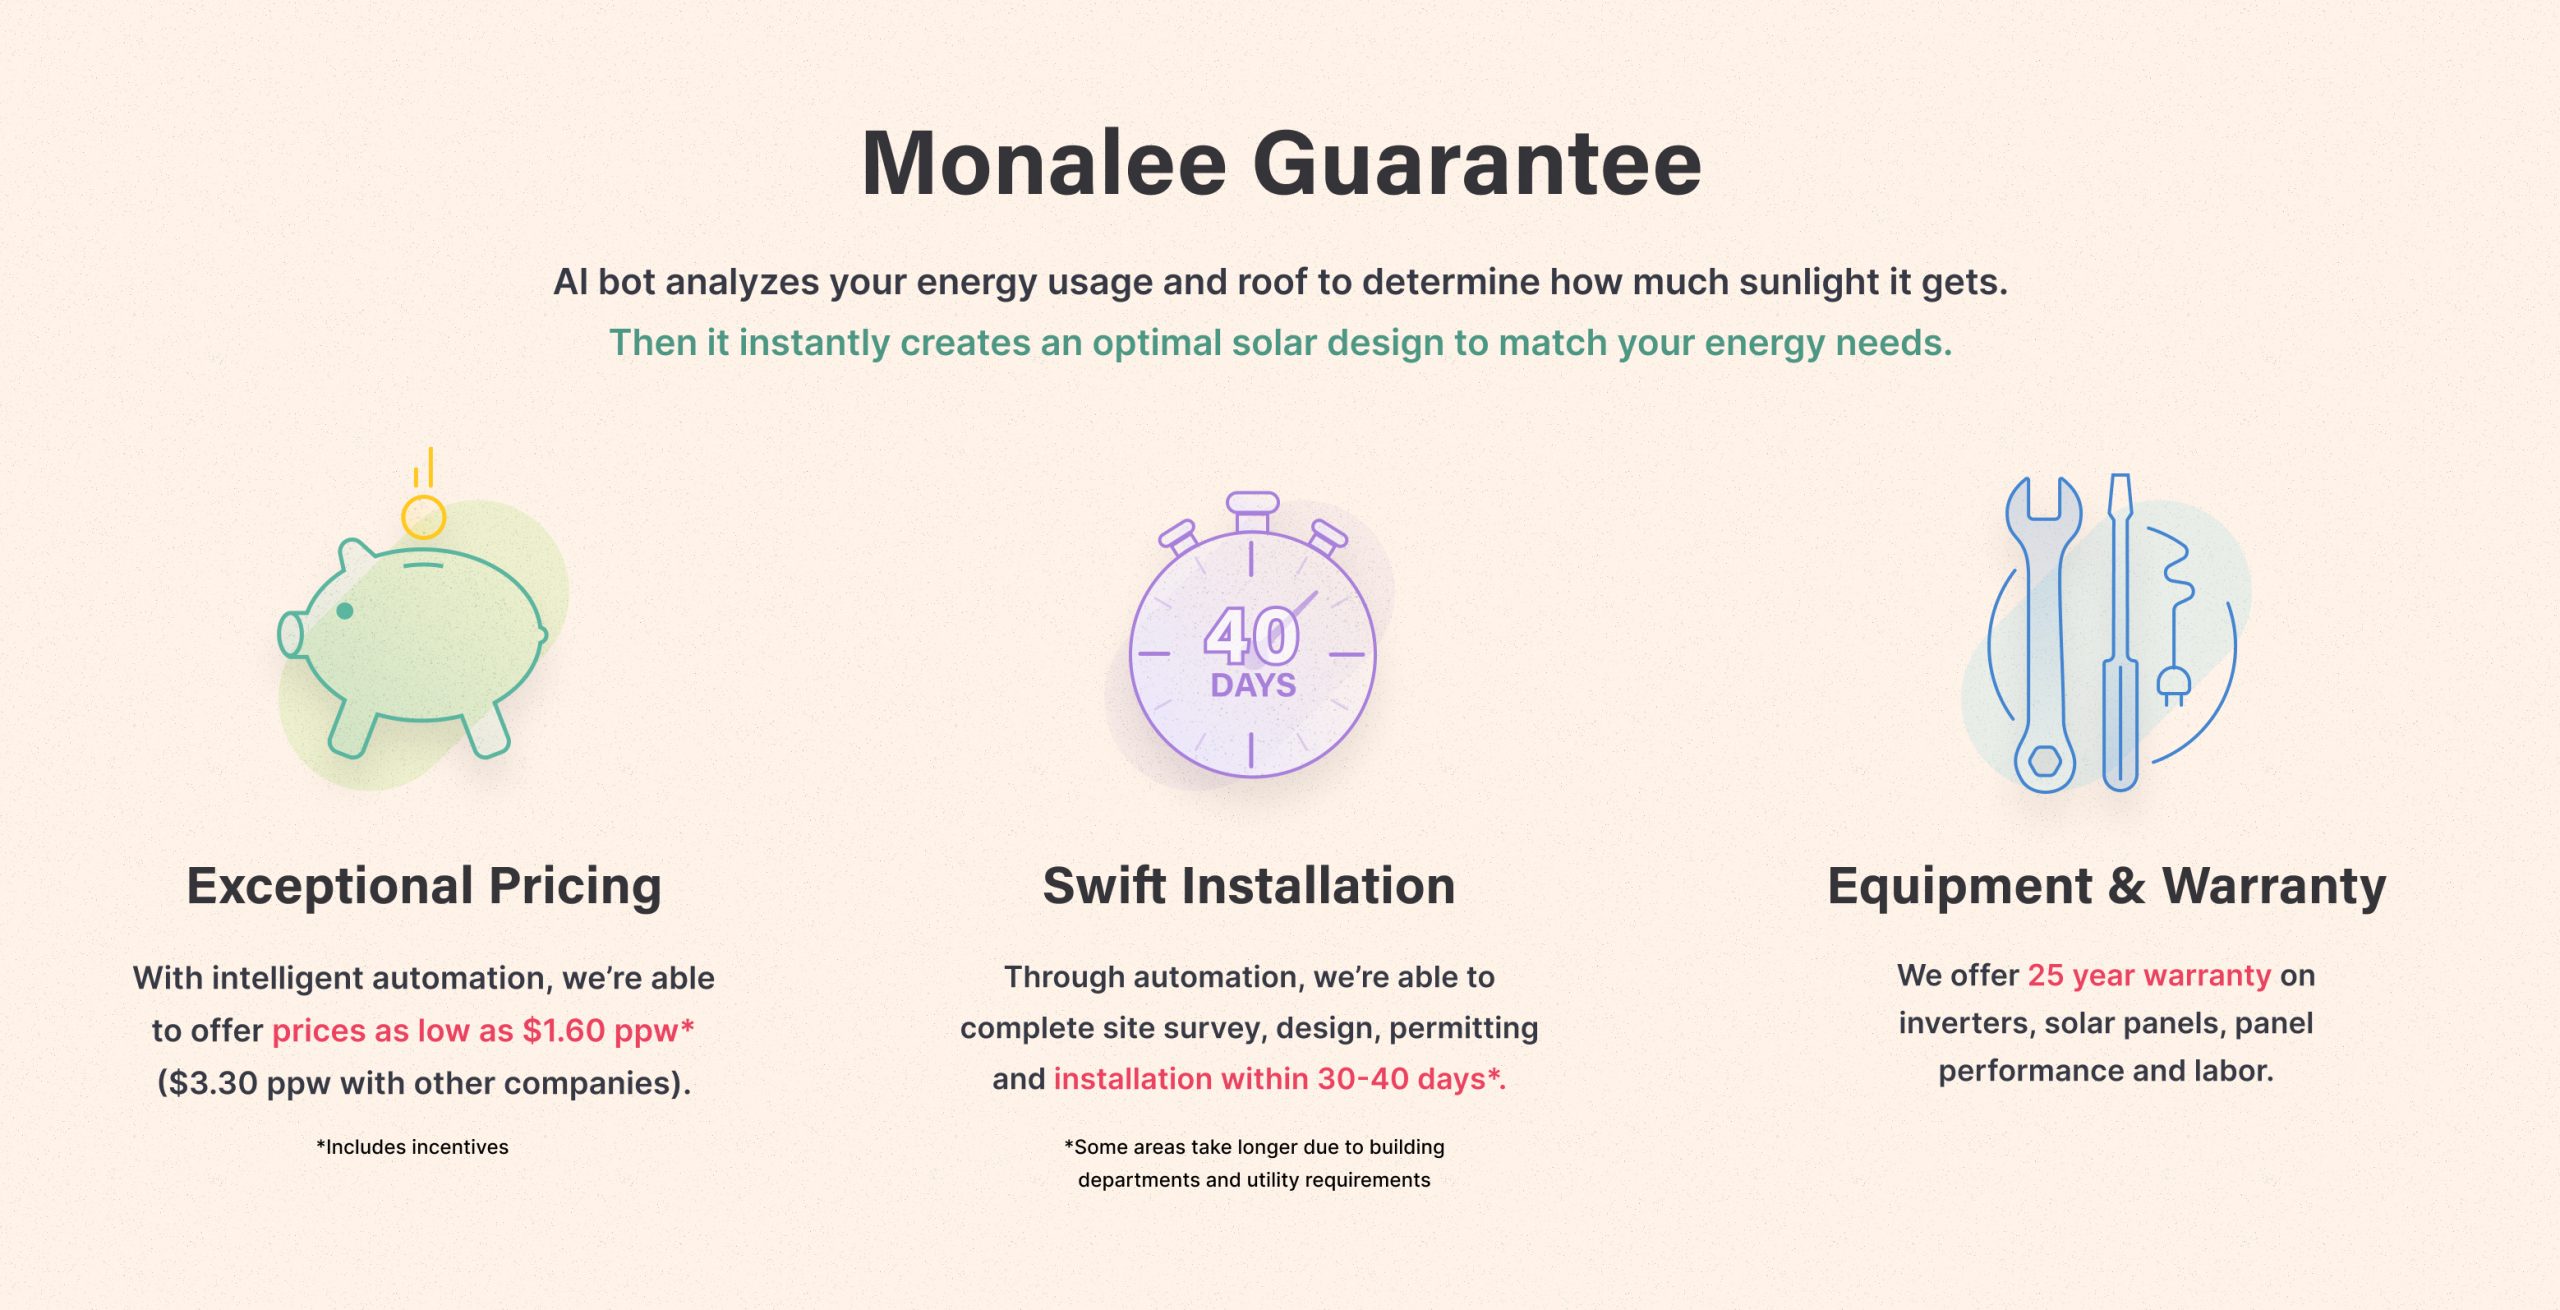 Monalee guarantees